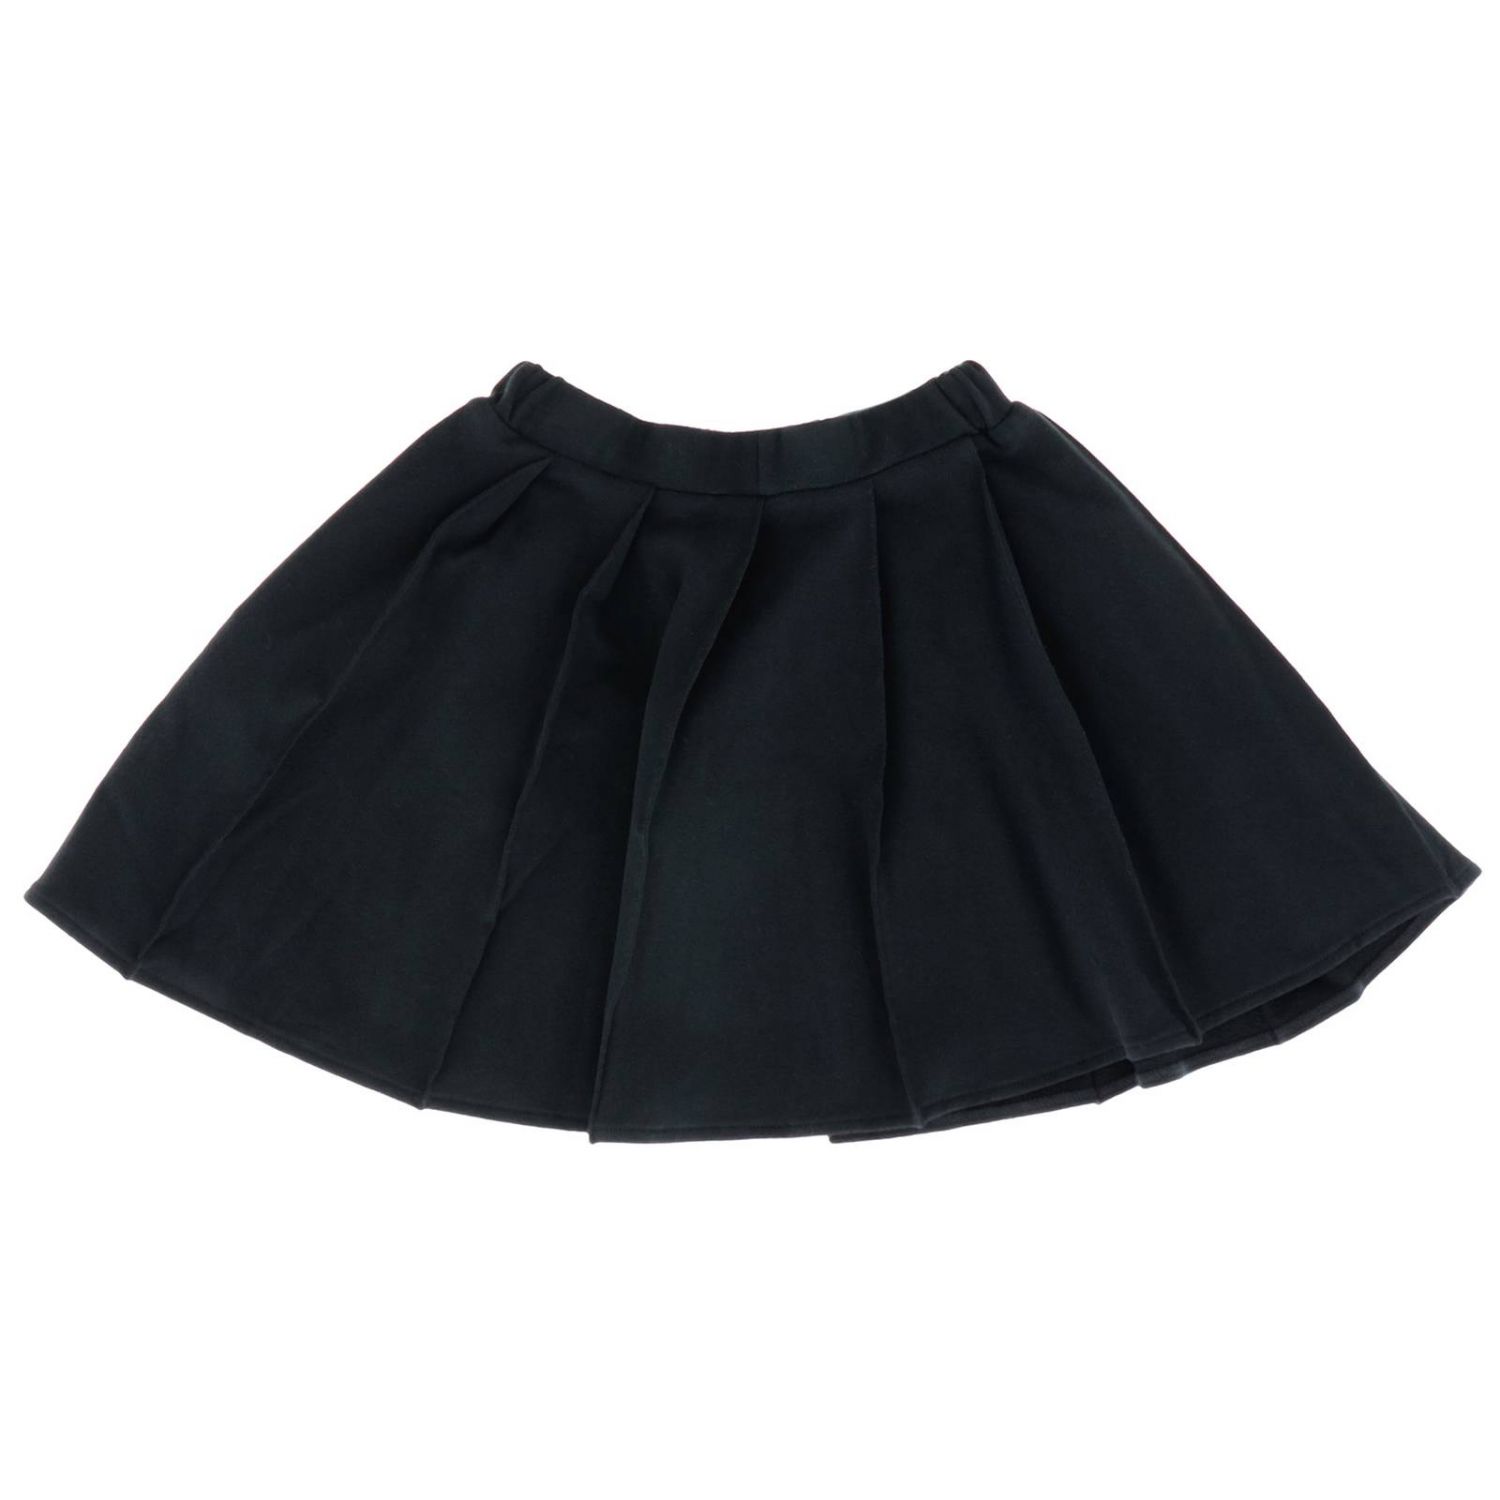 Il Gufo Outlet: skirt for girls - Black | Il Gufo skirt GN152 M0019 ...